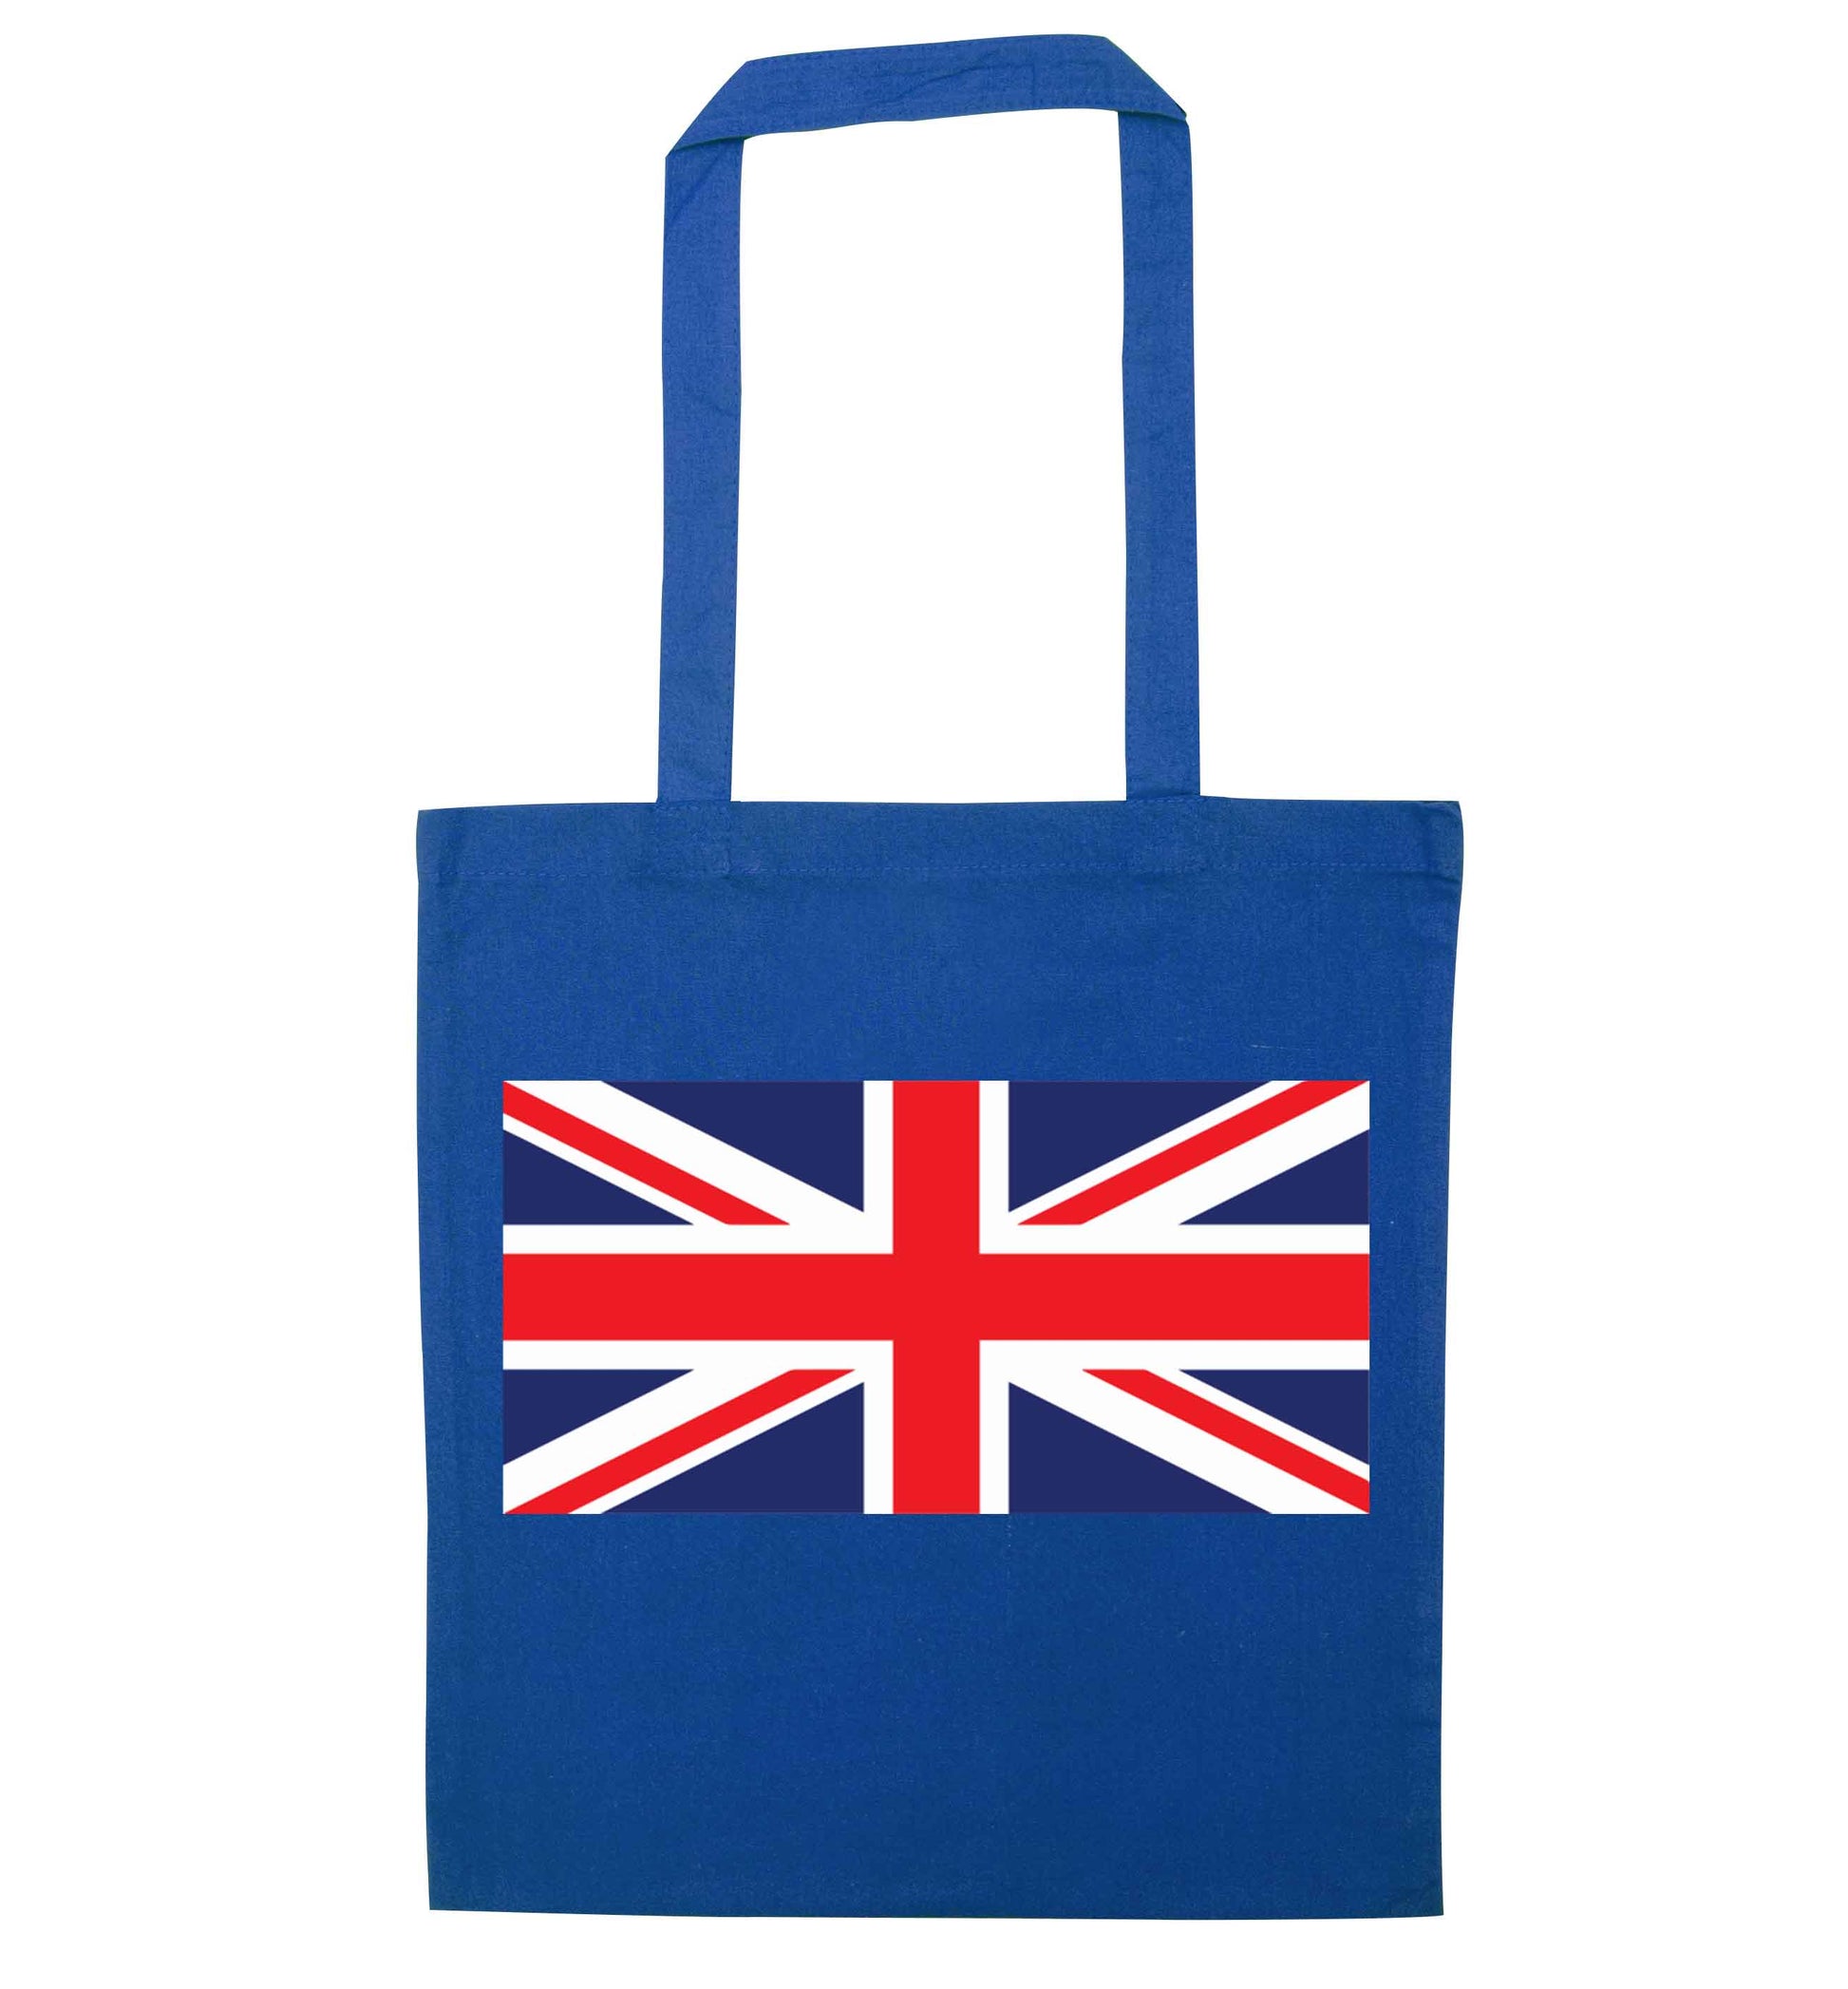 Union Jack blue tote bag